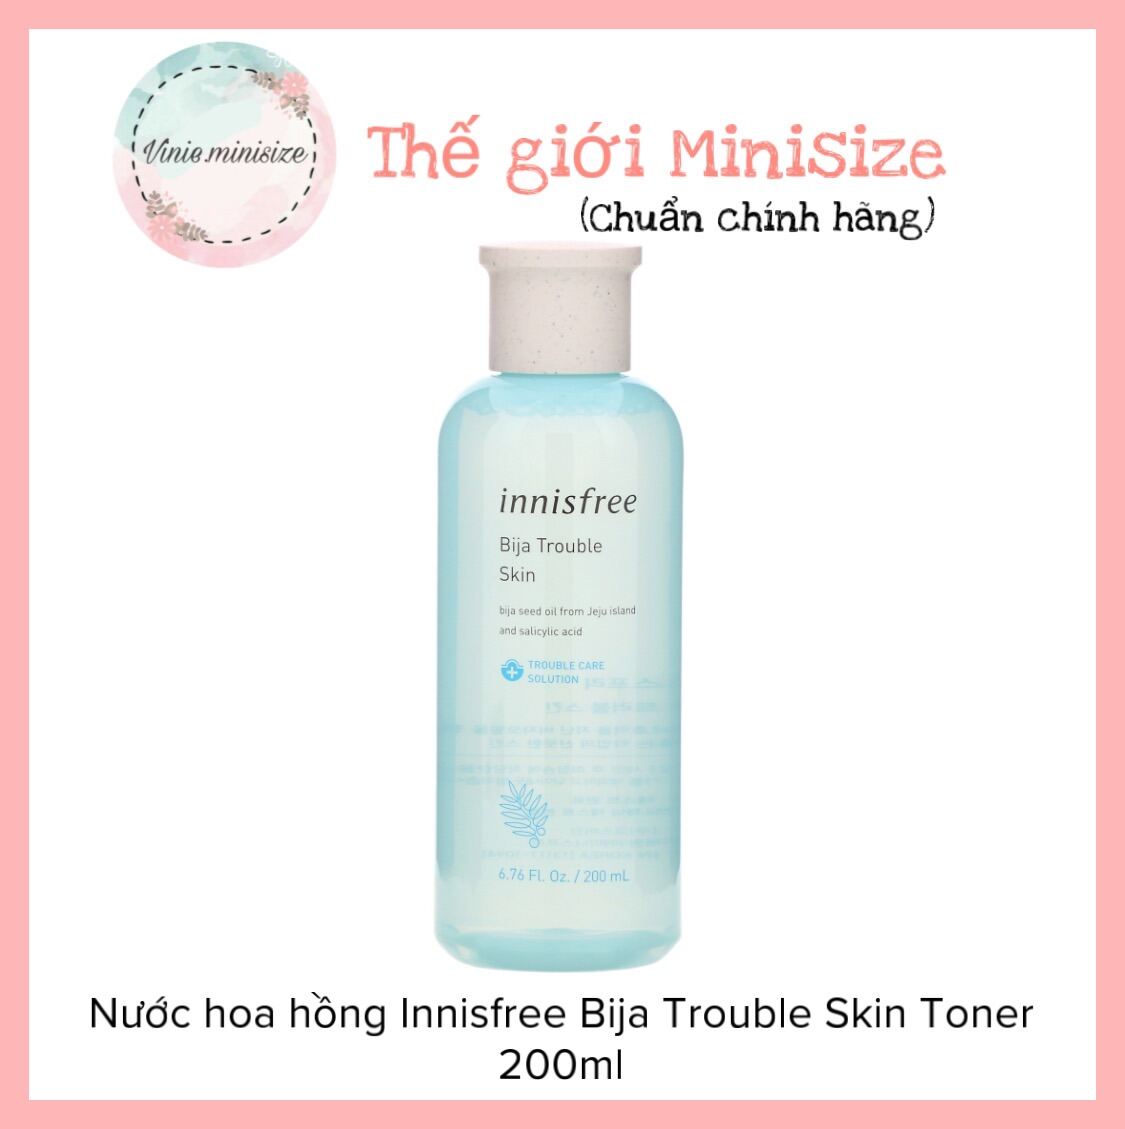 Nước hoa hồng Innisfree Bija Trouble Skin Toner 200ml | Vinie.minisize